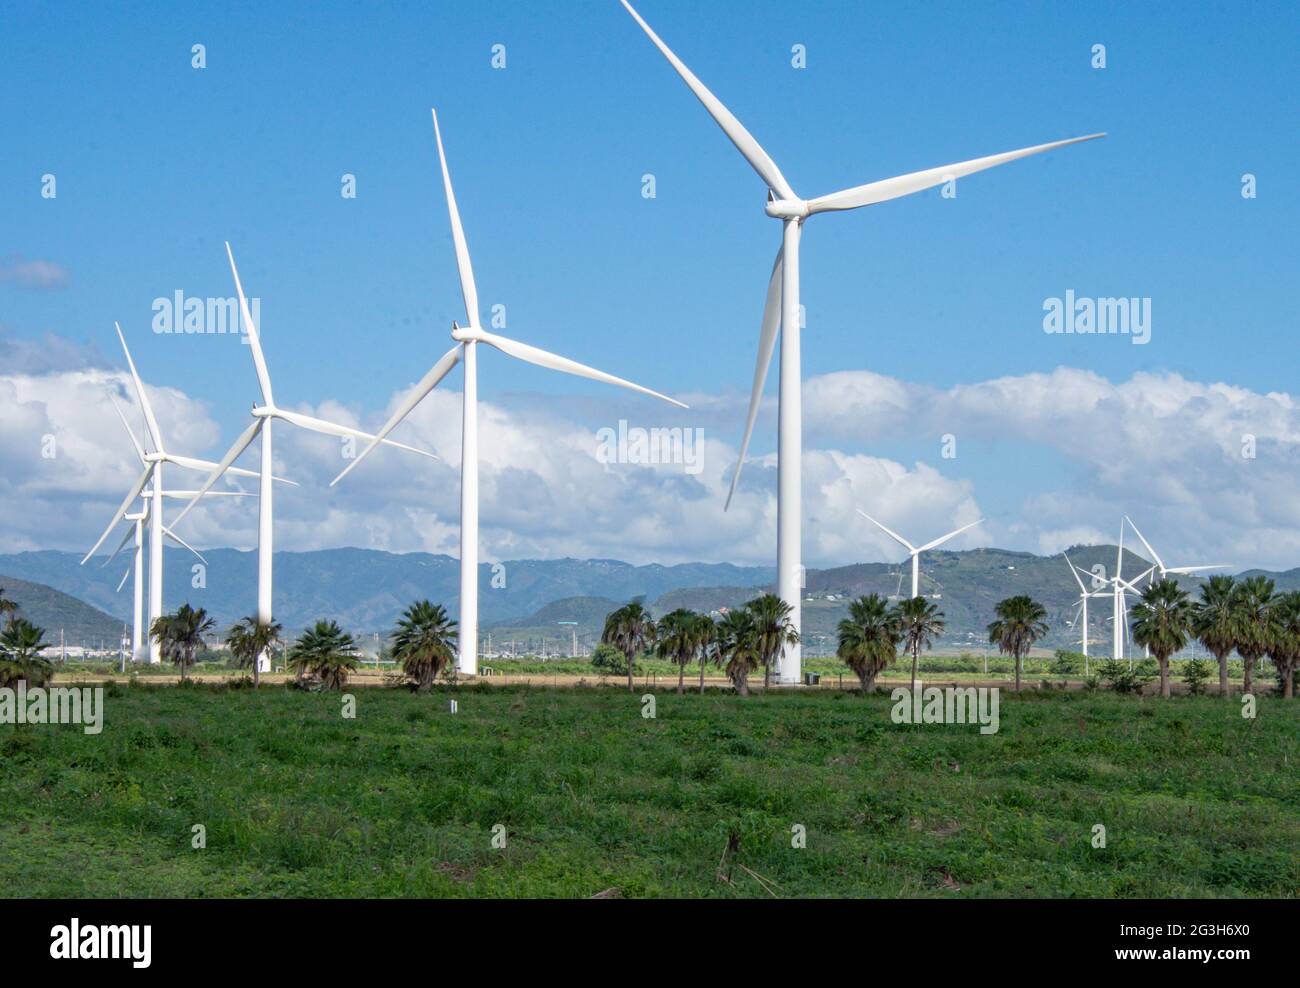 Windturbinen erzeugen saubere, erneuerbare Energie. Speicherplatz kopieren. Stockfoto